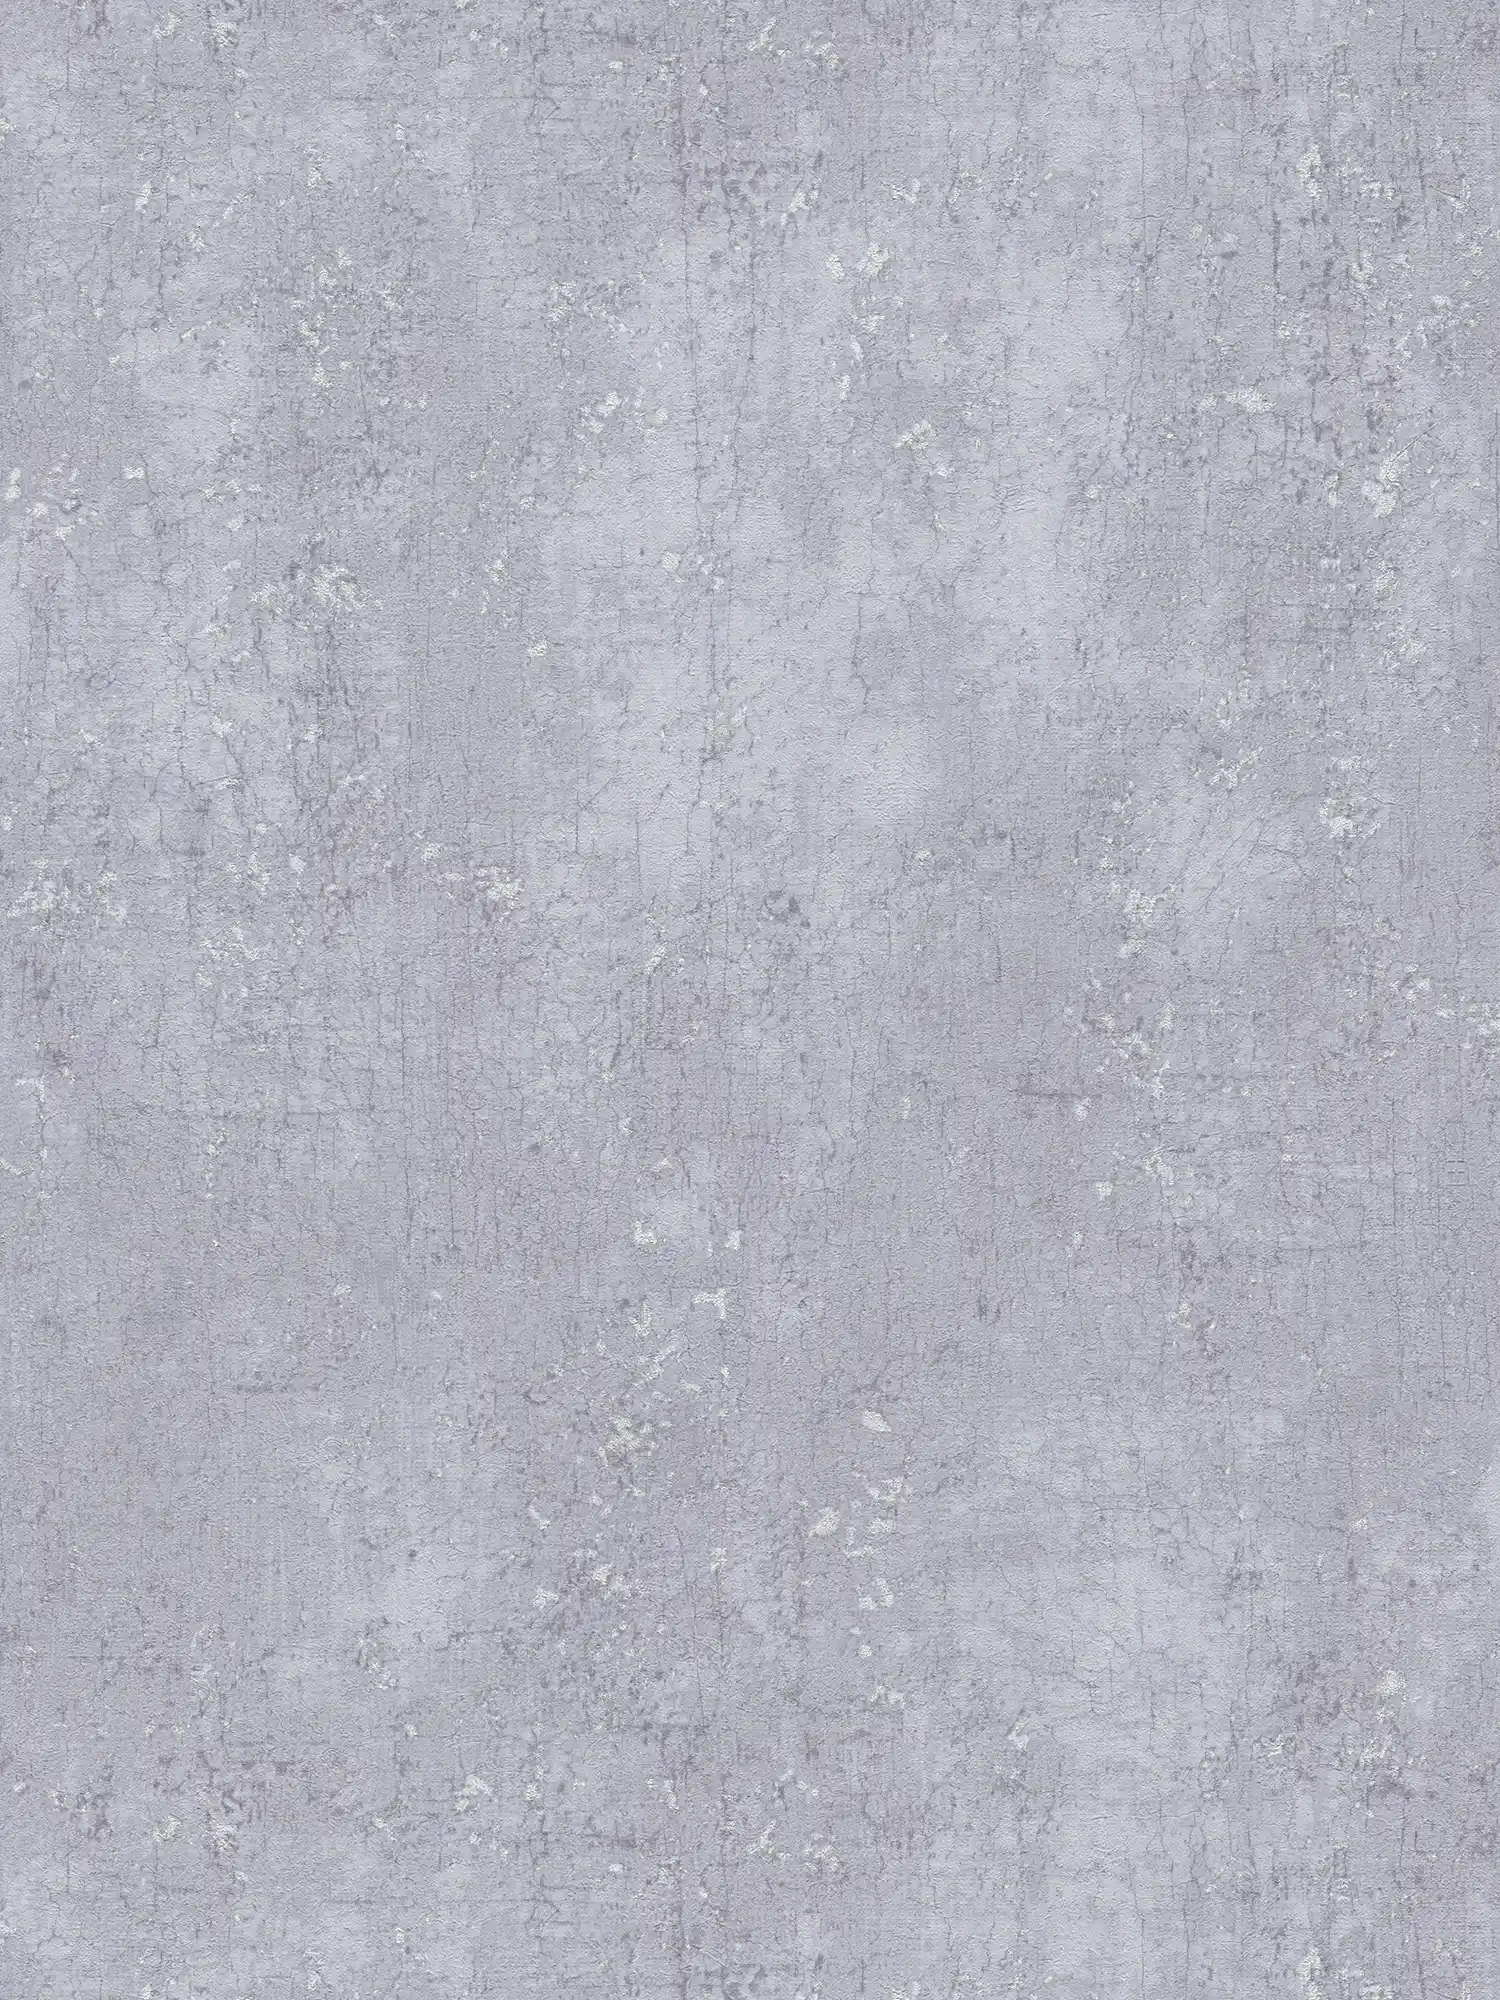 Grey wallpaper plaster look in used look - grey, metallic
